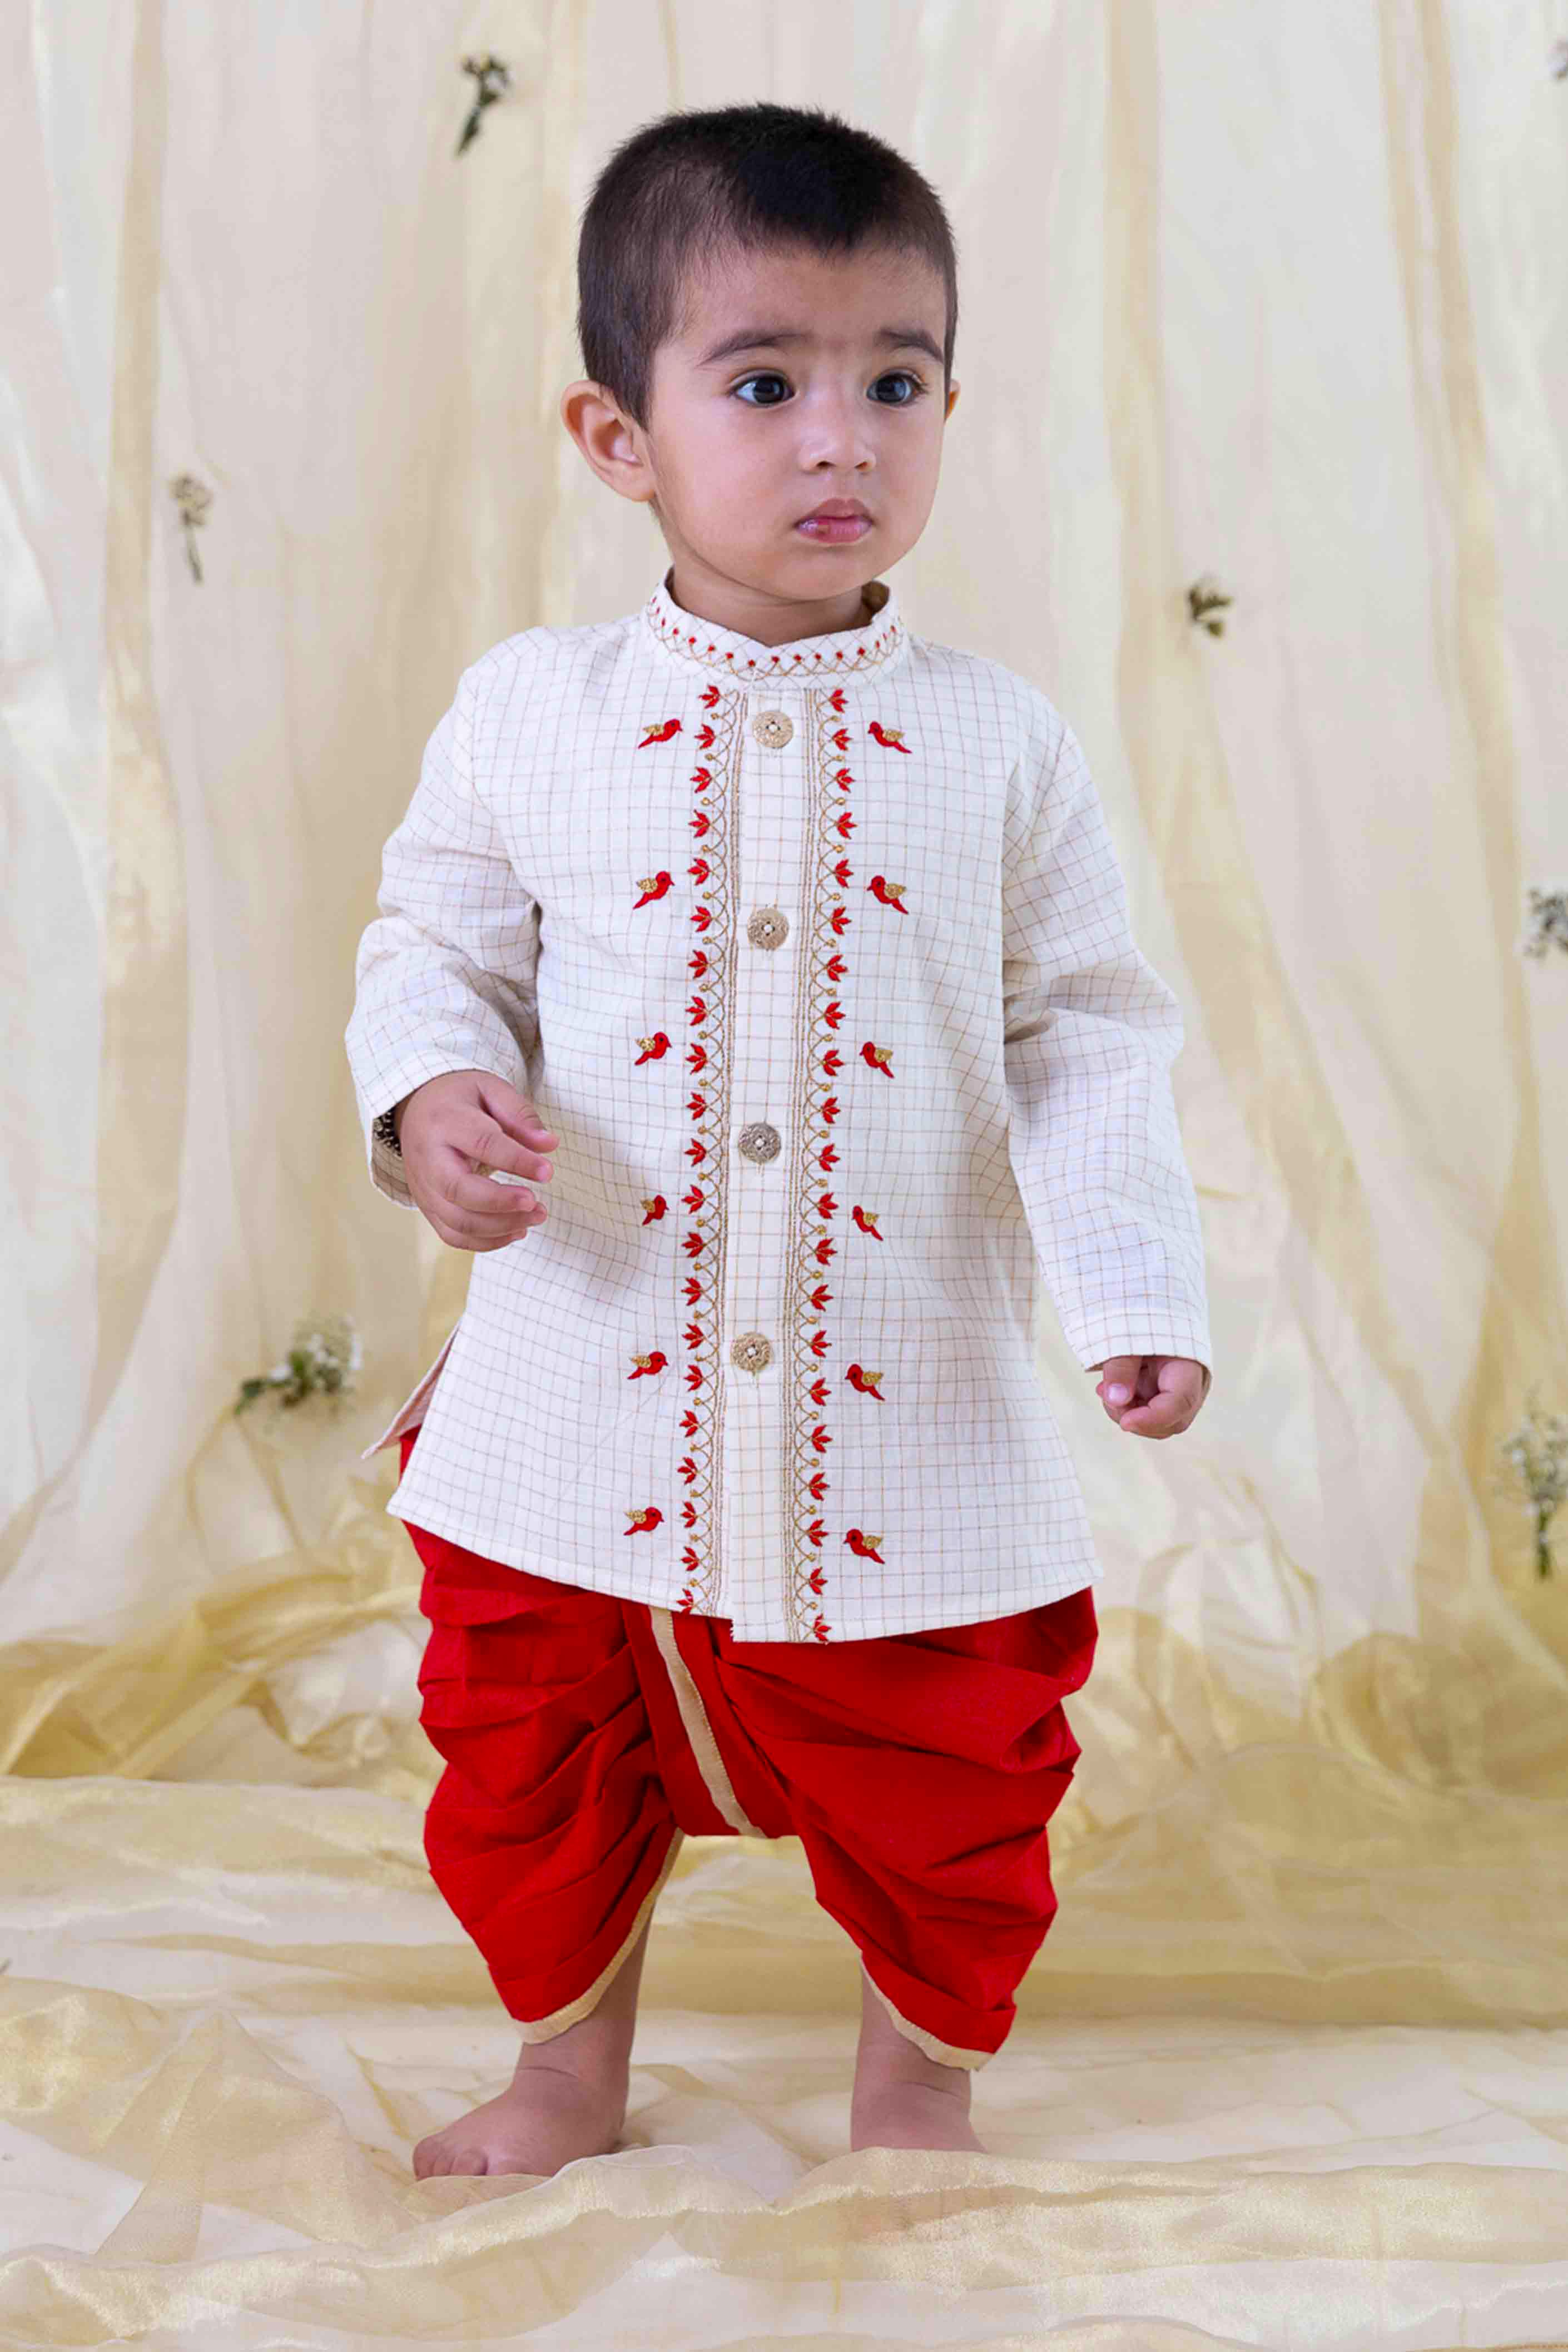 Kids Full Sleeve Jodhpuri Suit at Rs 1589 in Mumbai | ID: 19911541062